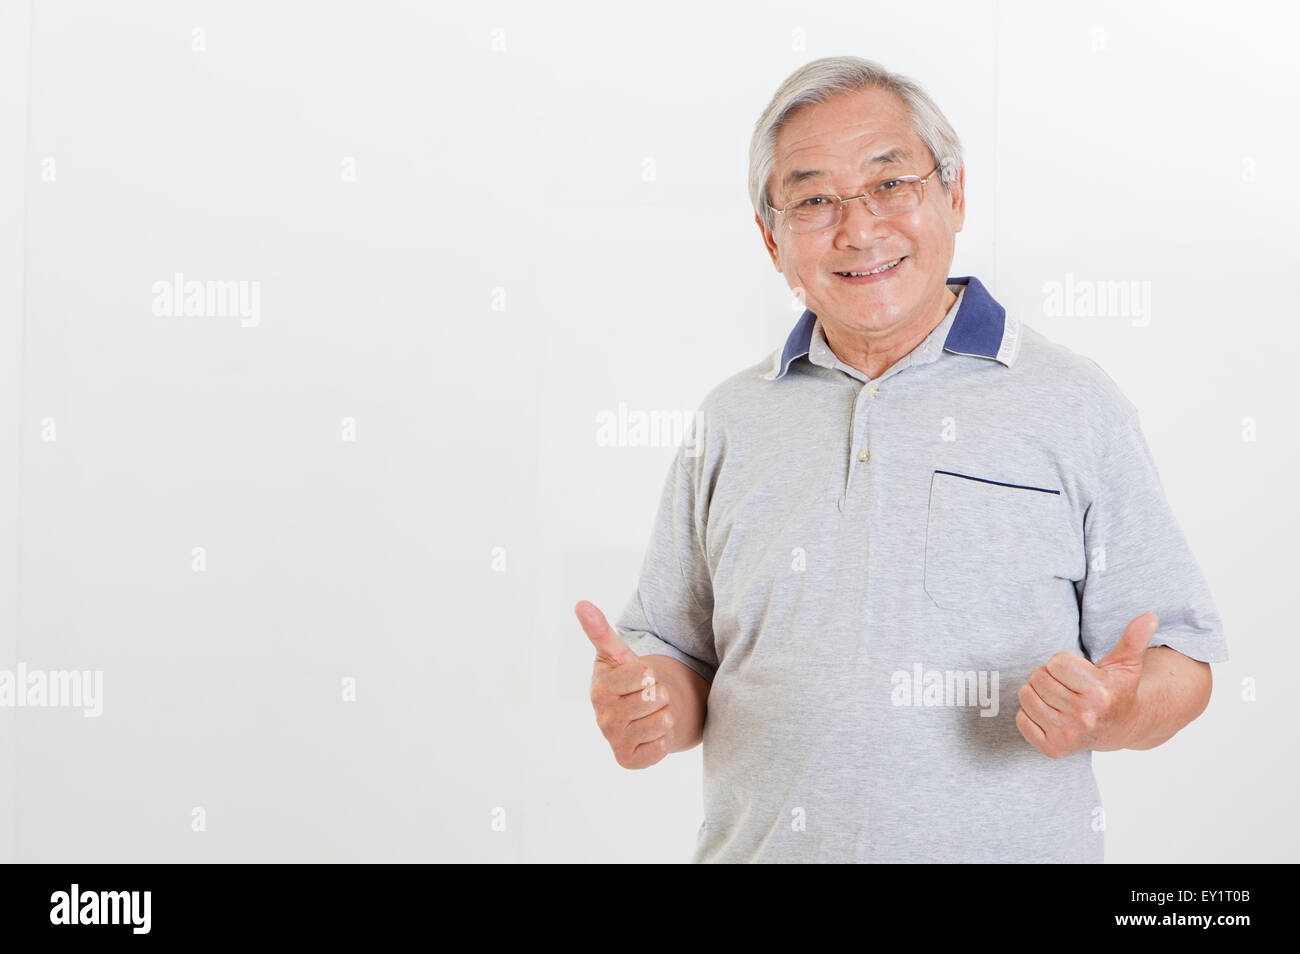 Senior man smiling at the camera with thumb up, Banque D'Images